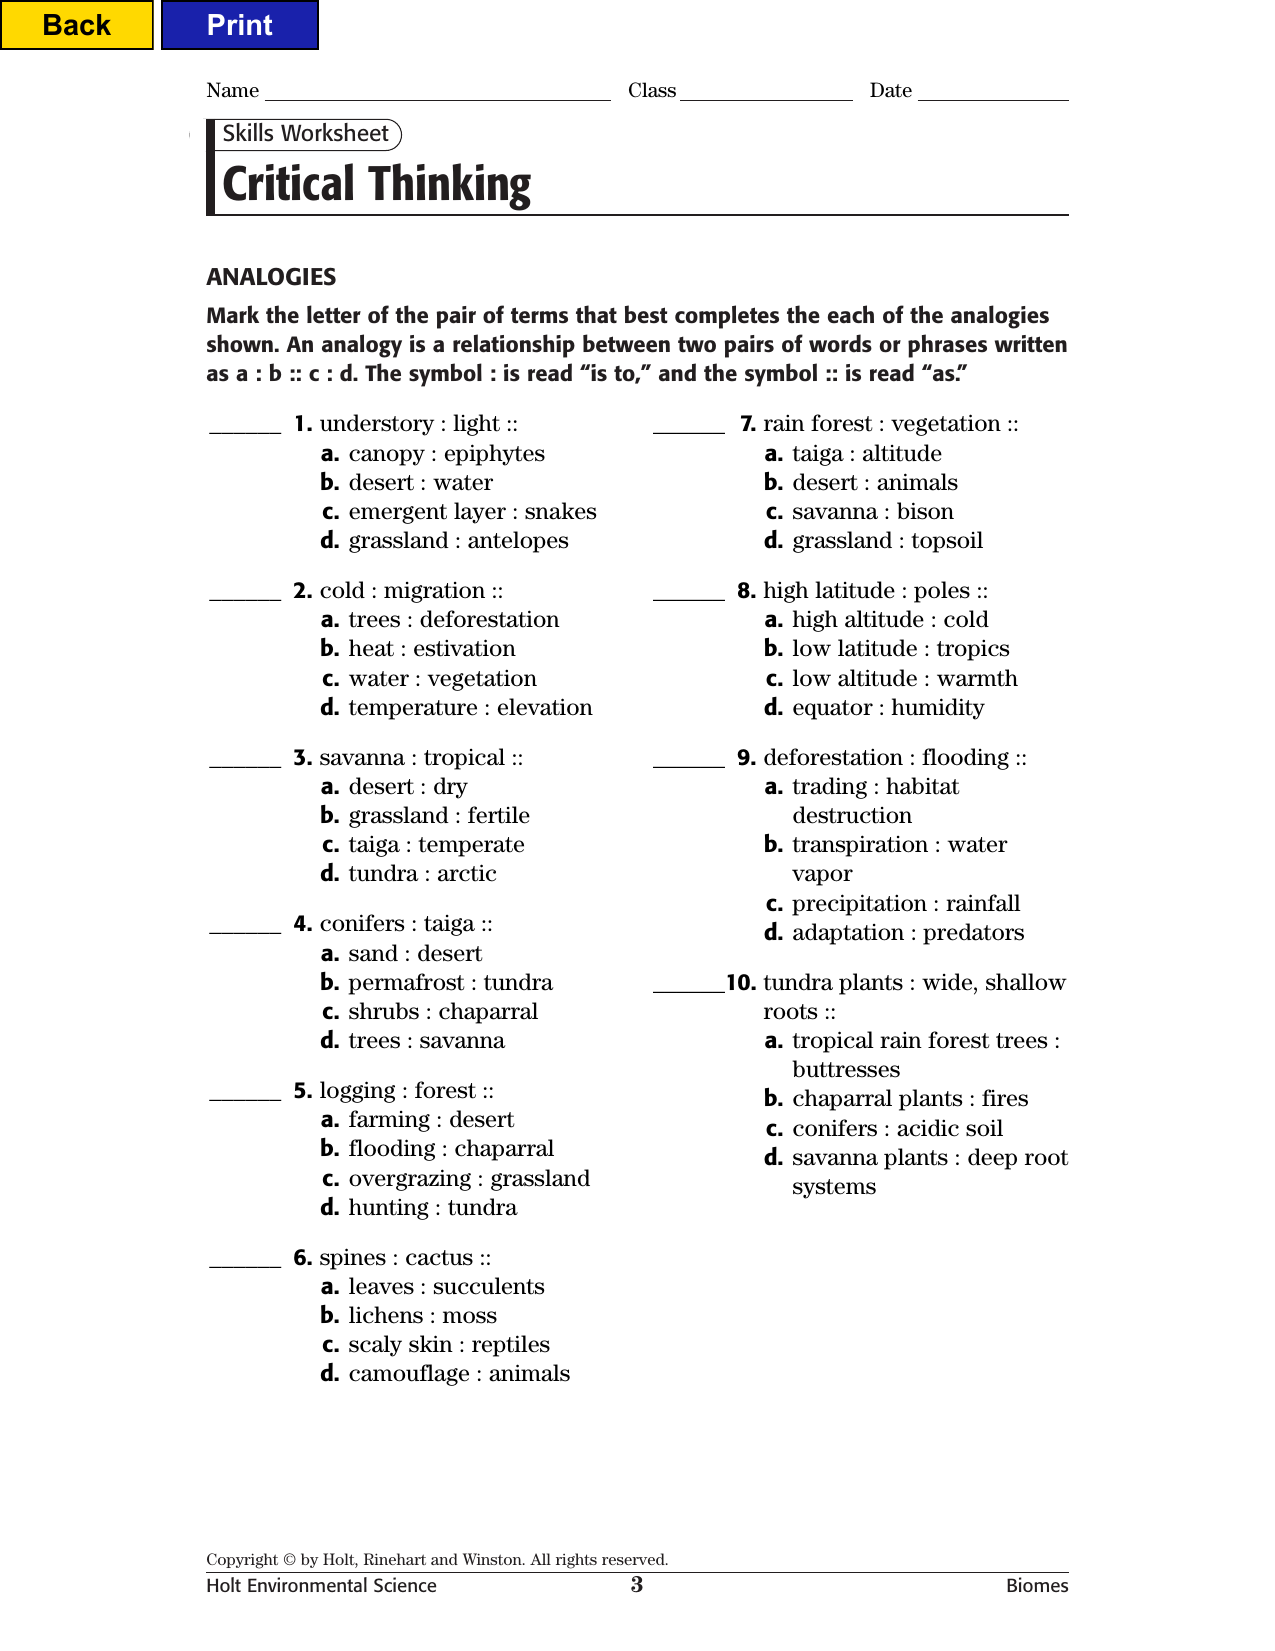 Skills Worksheet Critical Thinking - Promotiontablecovers Regarding Skills Worksheet Critical Thinking Analogies